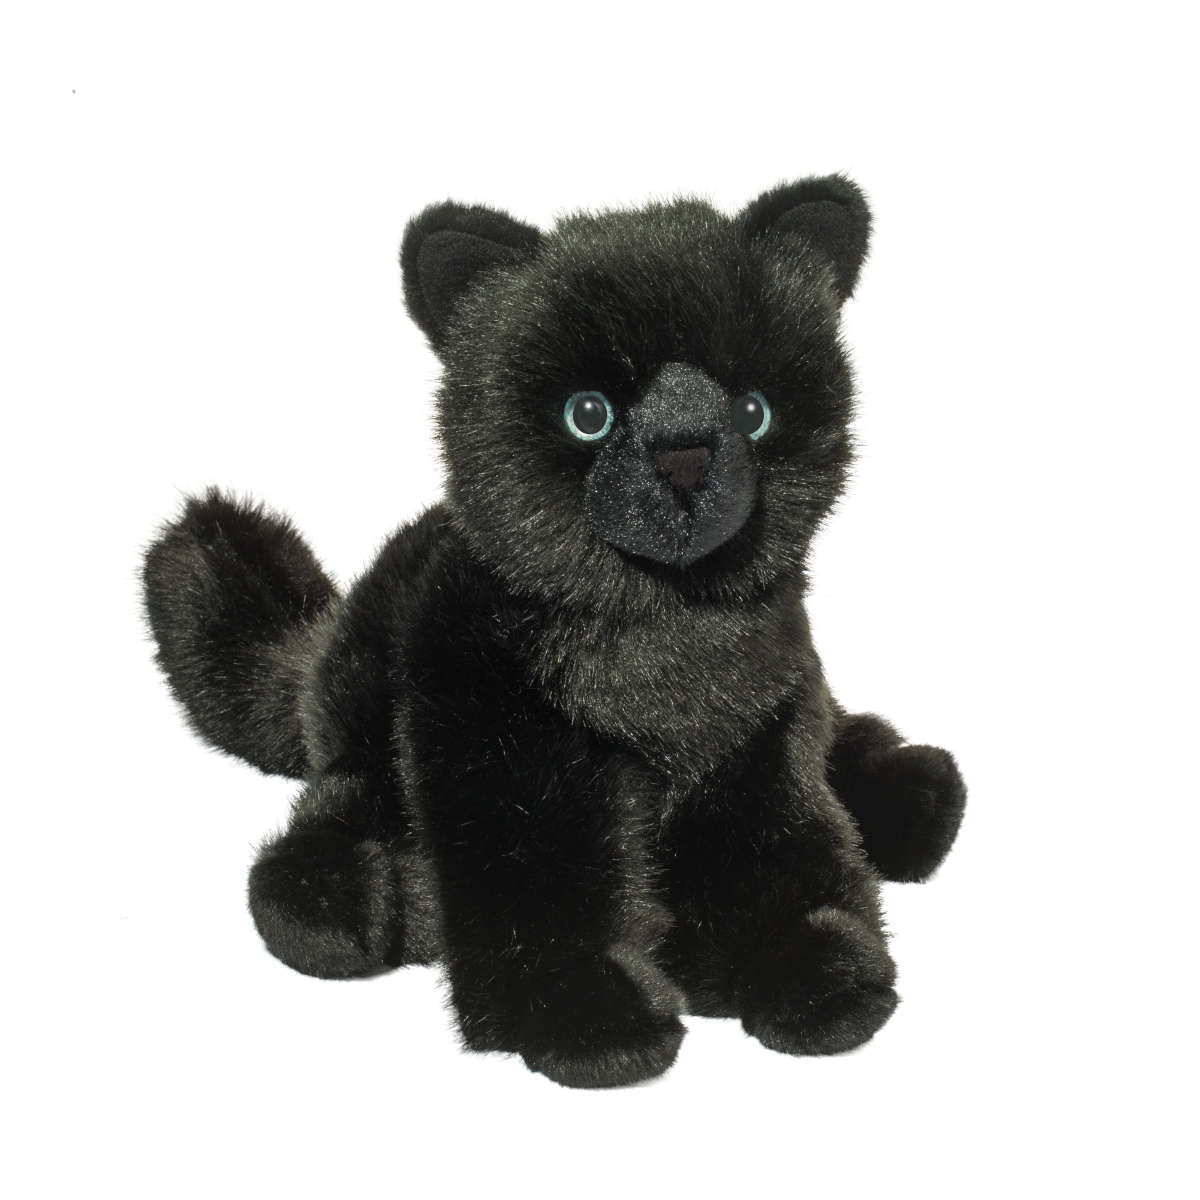 Salem the Black Cat by Douglas